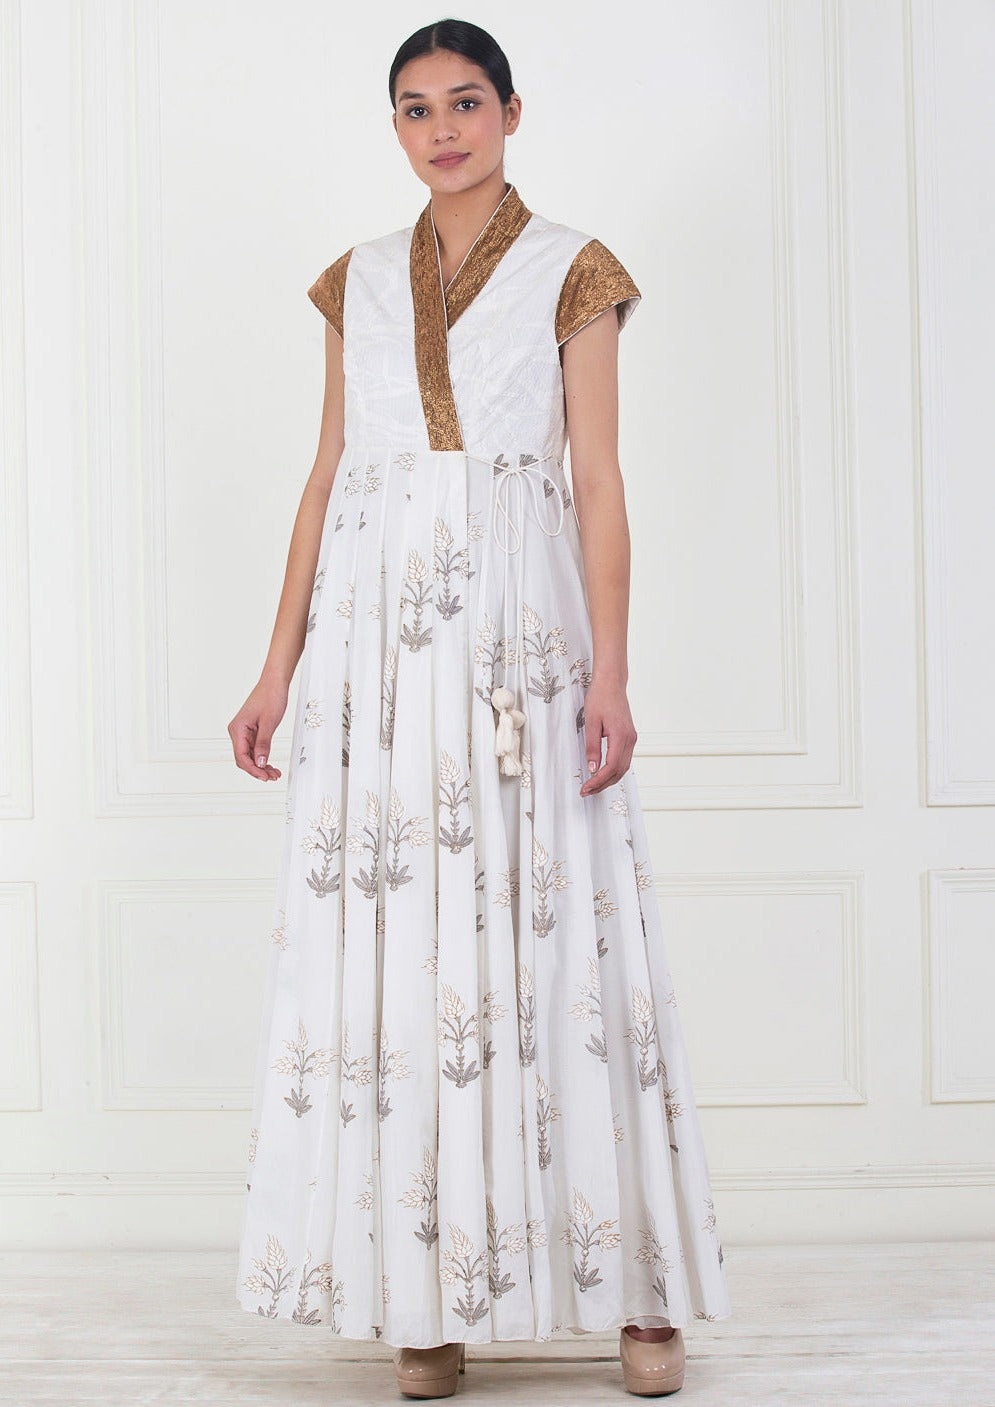 Details more than 117 cotton white anarkali dress best